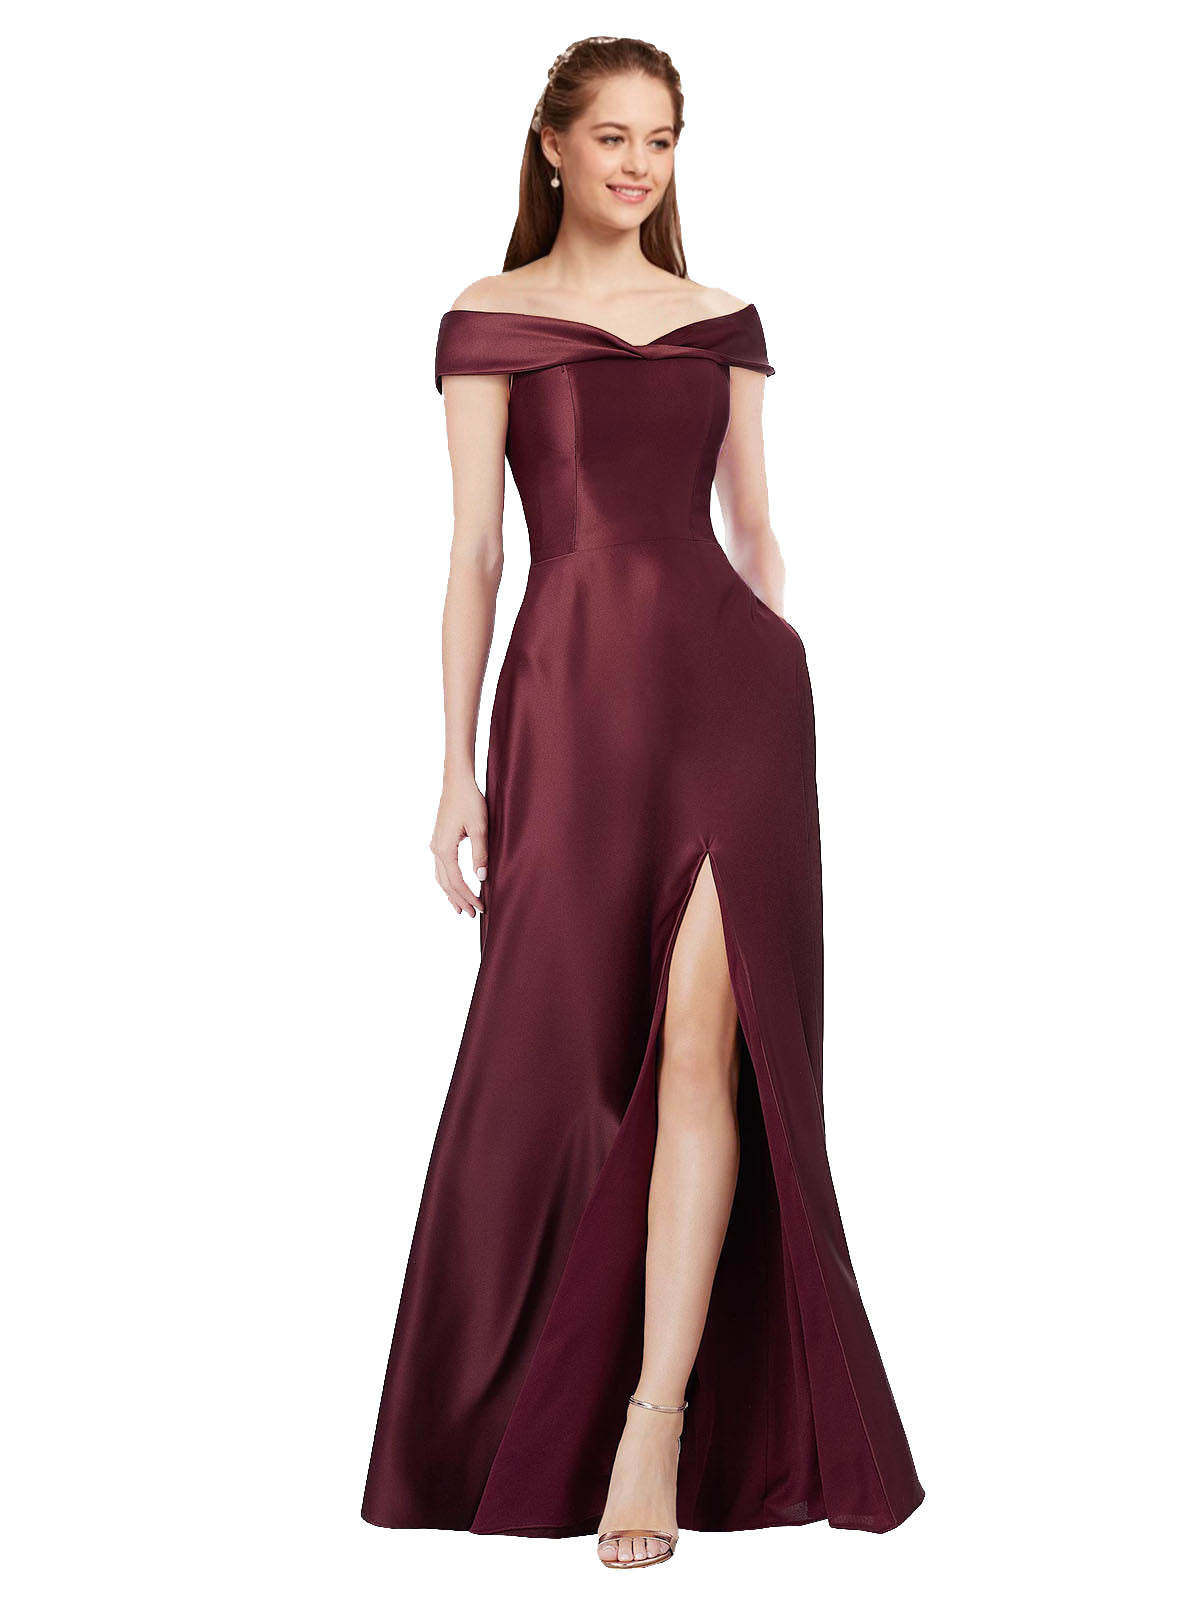 Burgundy Gold A-Line Strapless, Off the Shoulder Long Satin Bridesmaid Dress Ula